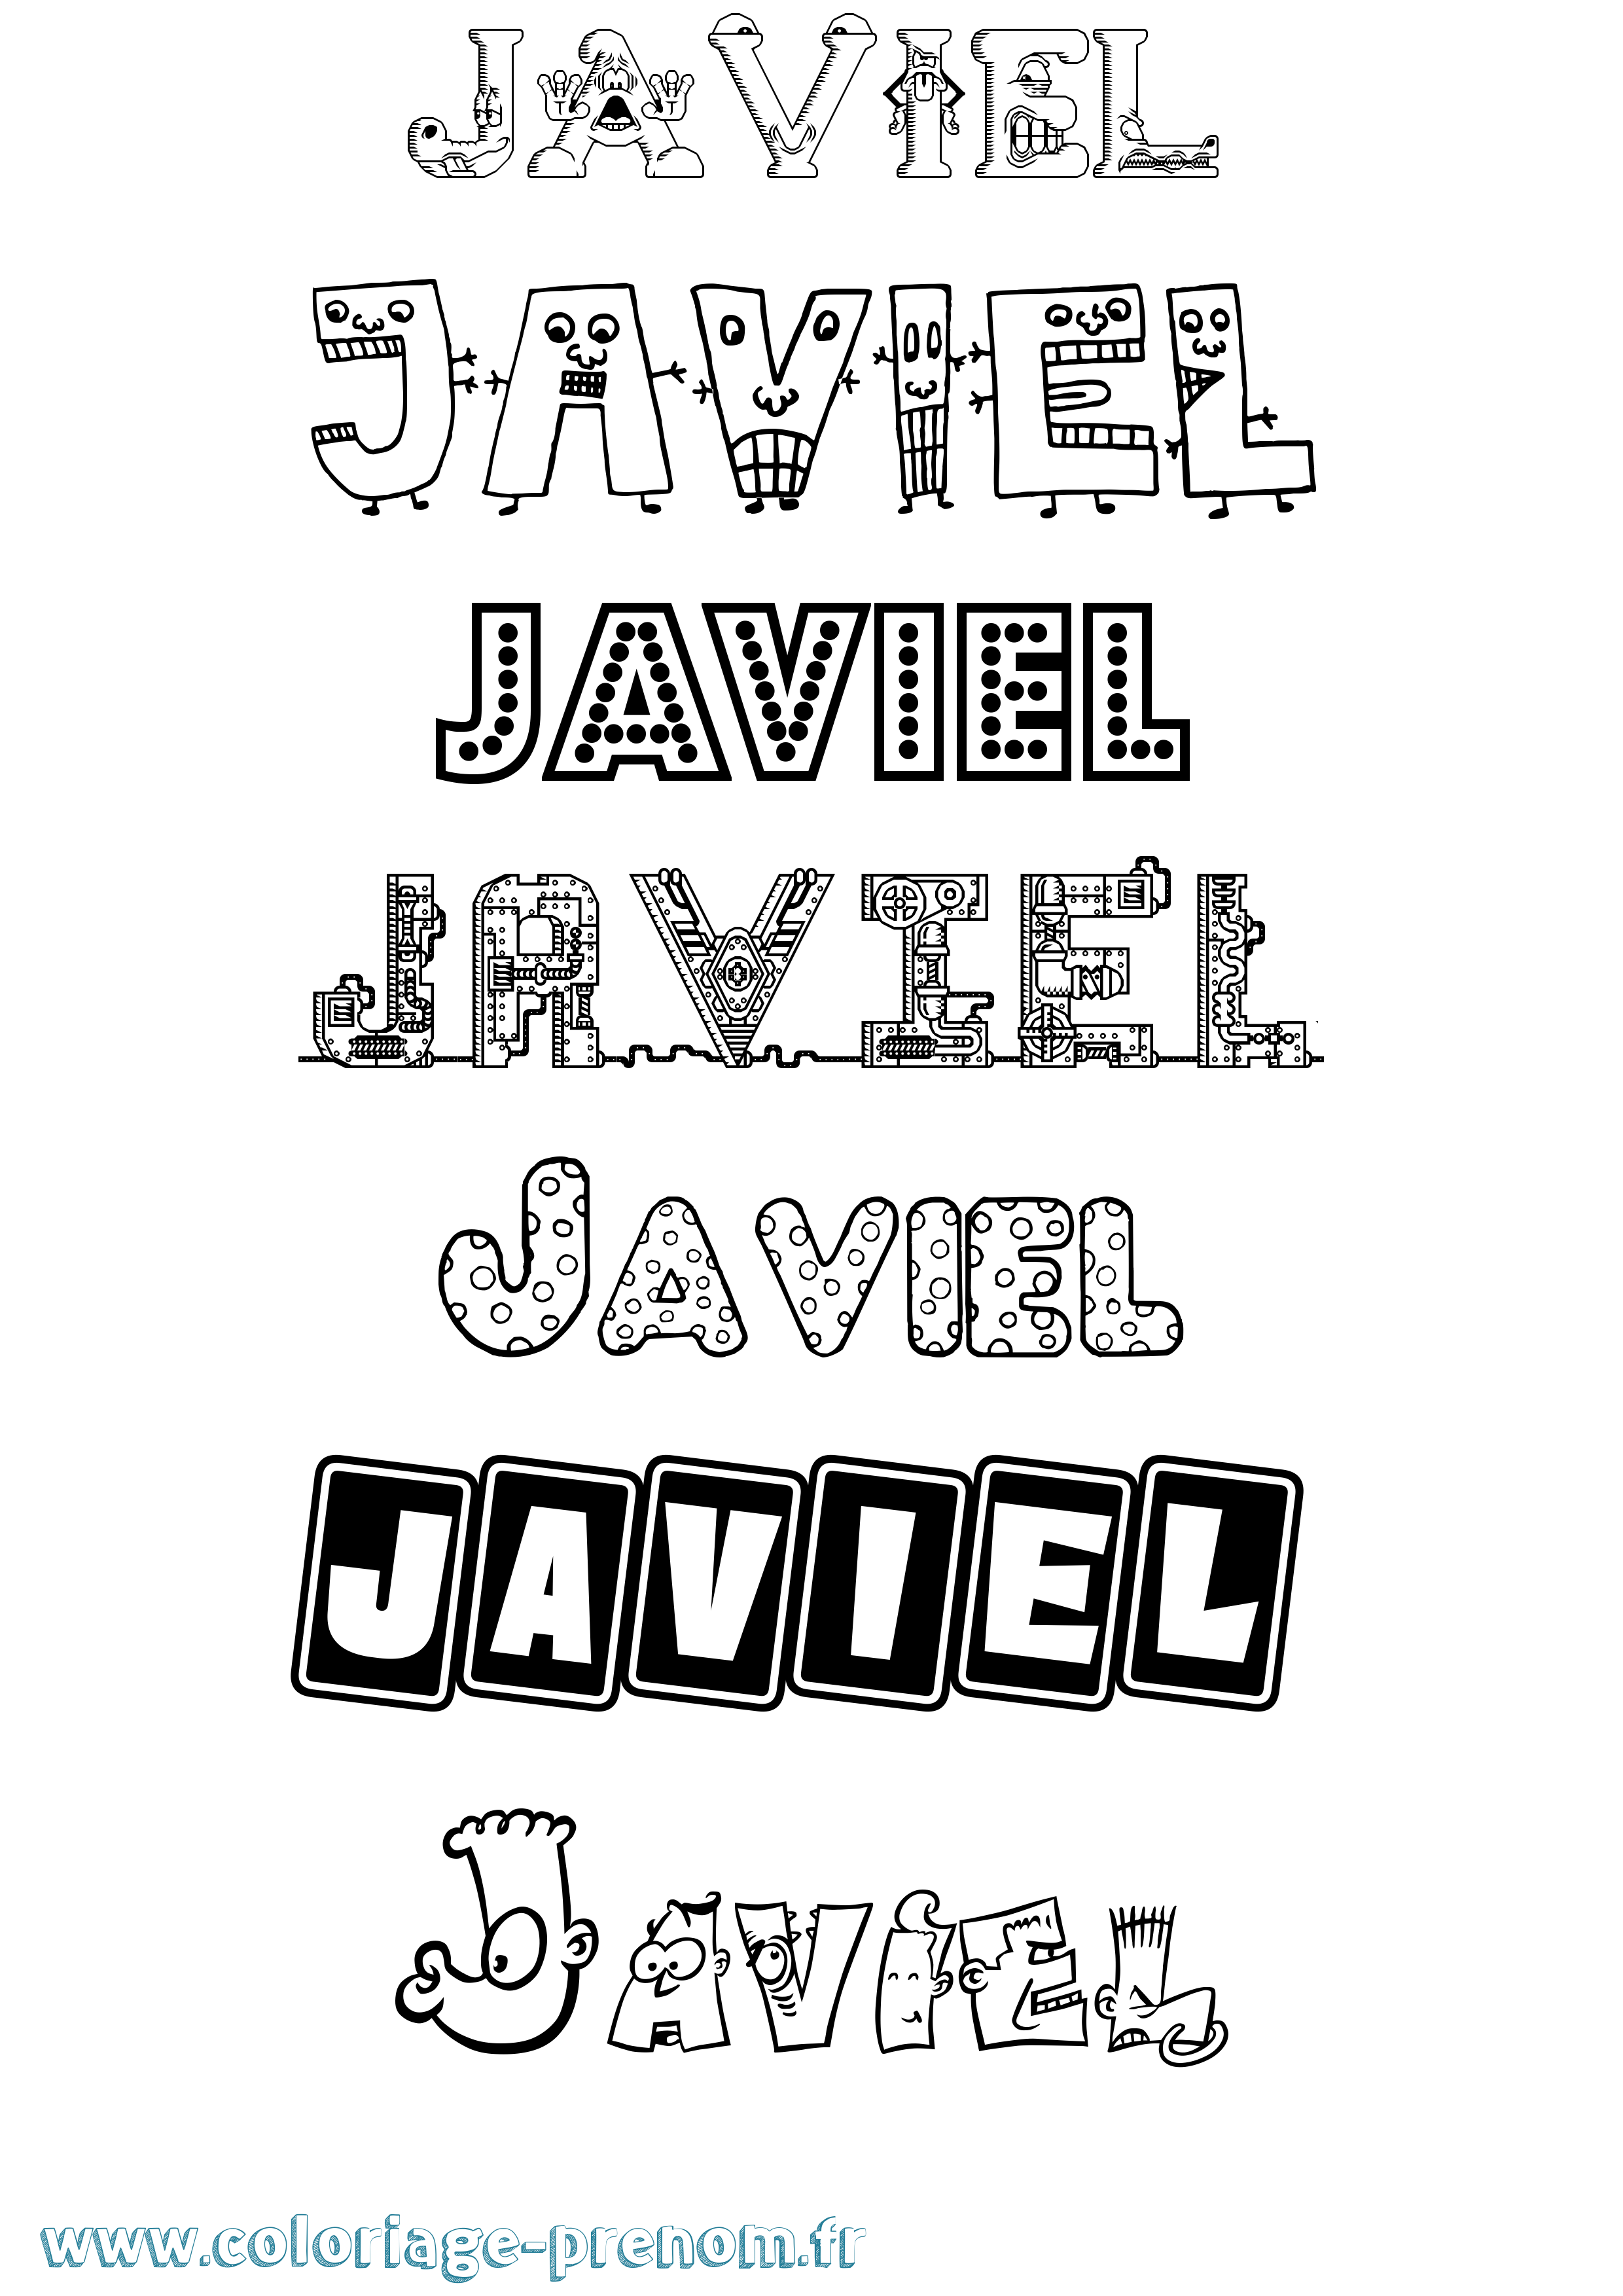 Coloriage prénom Javiel Fun